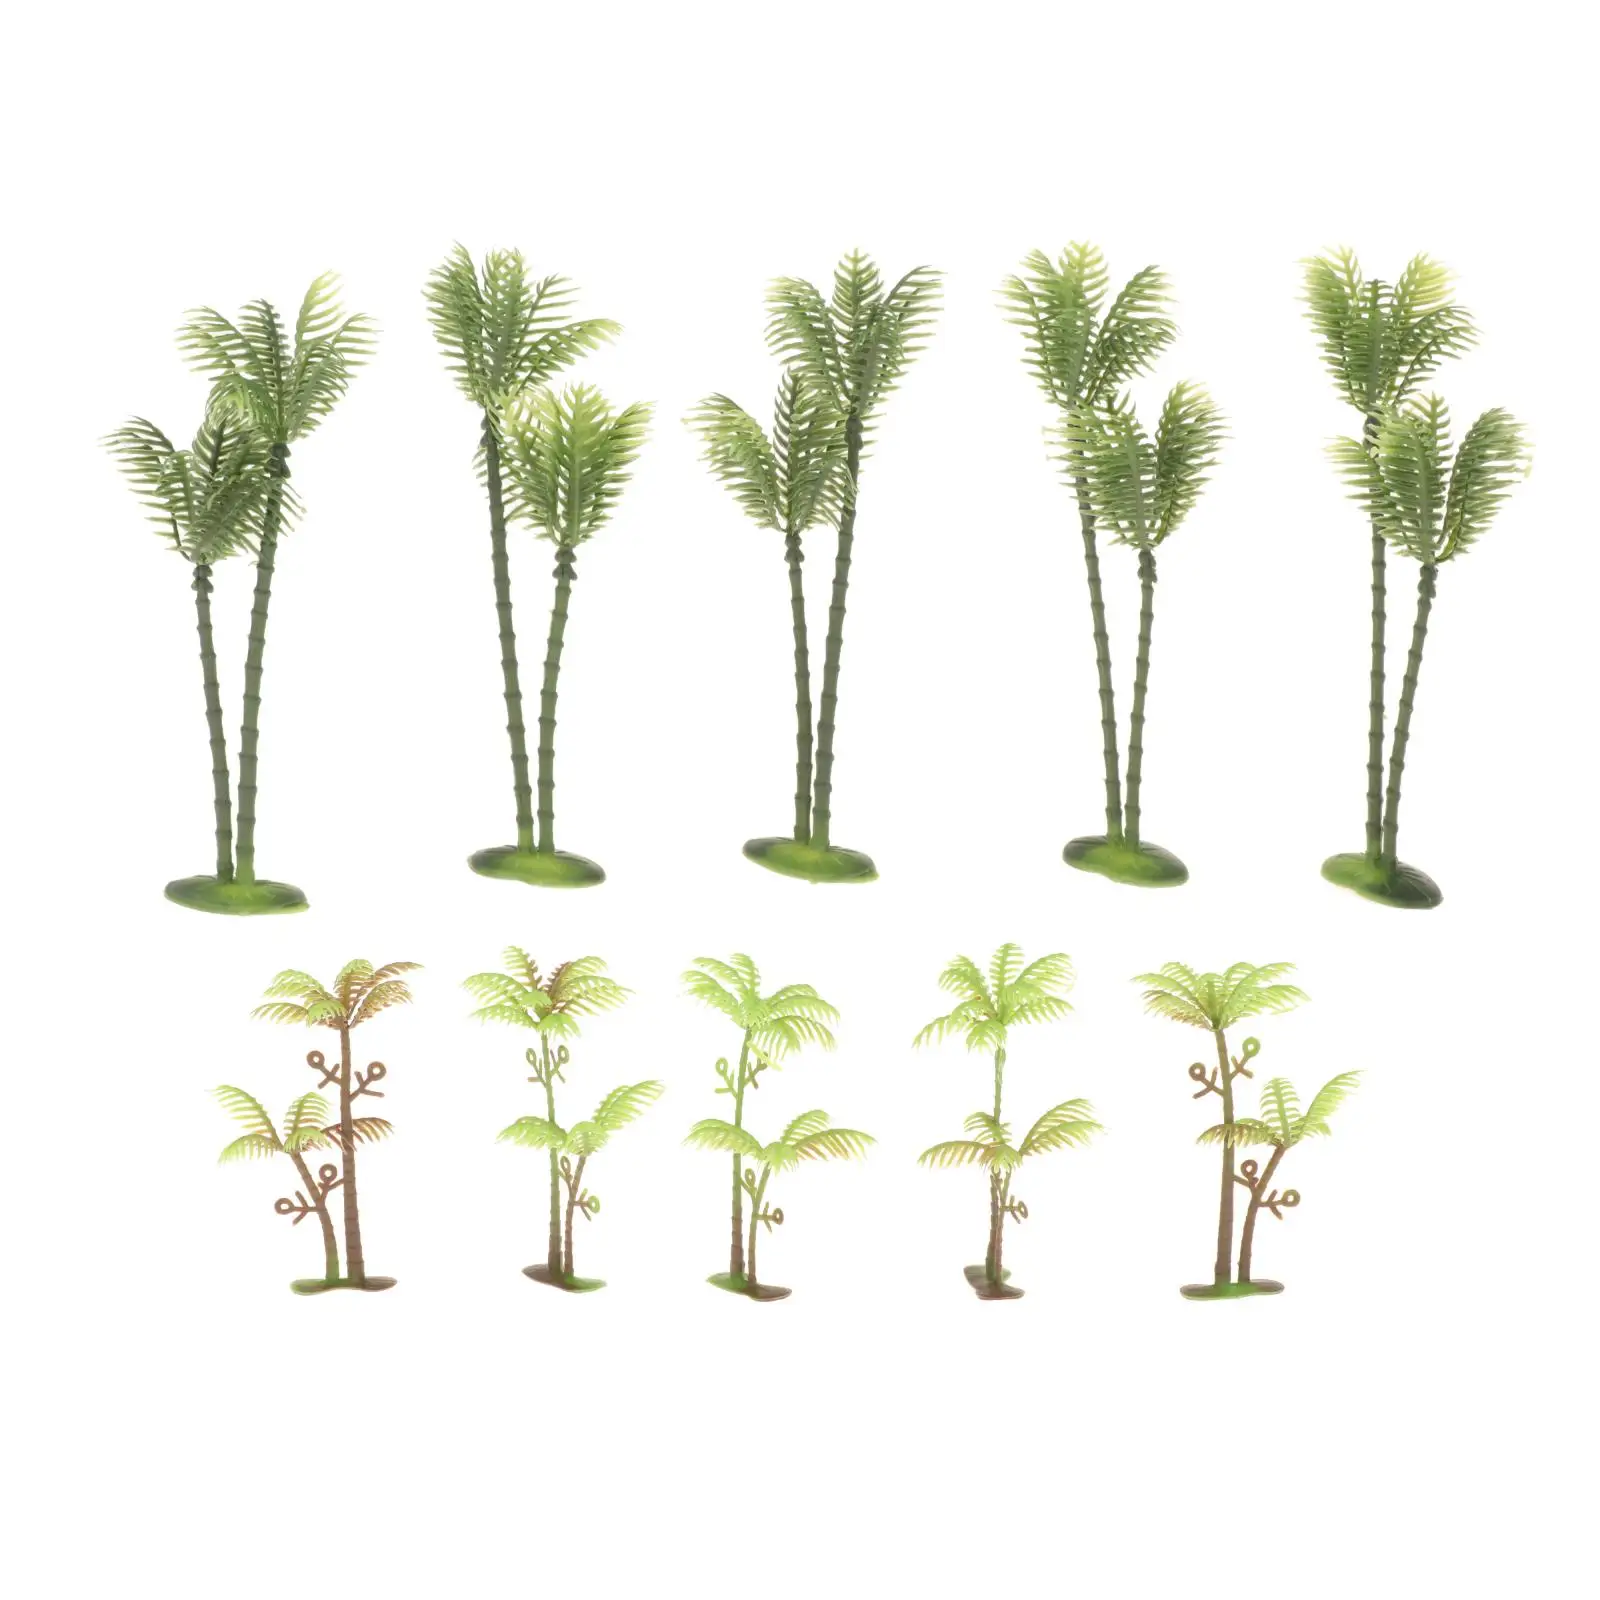 10x Coconut Trees Railway Train Garden Architecture Landscape Model 1/75 1/150 Scenery Trees Diorama Decor OO N Scale Green